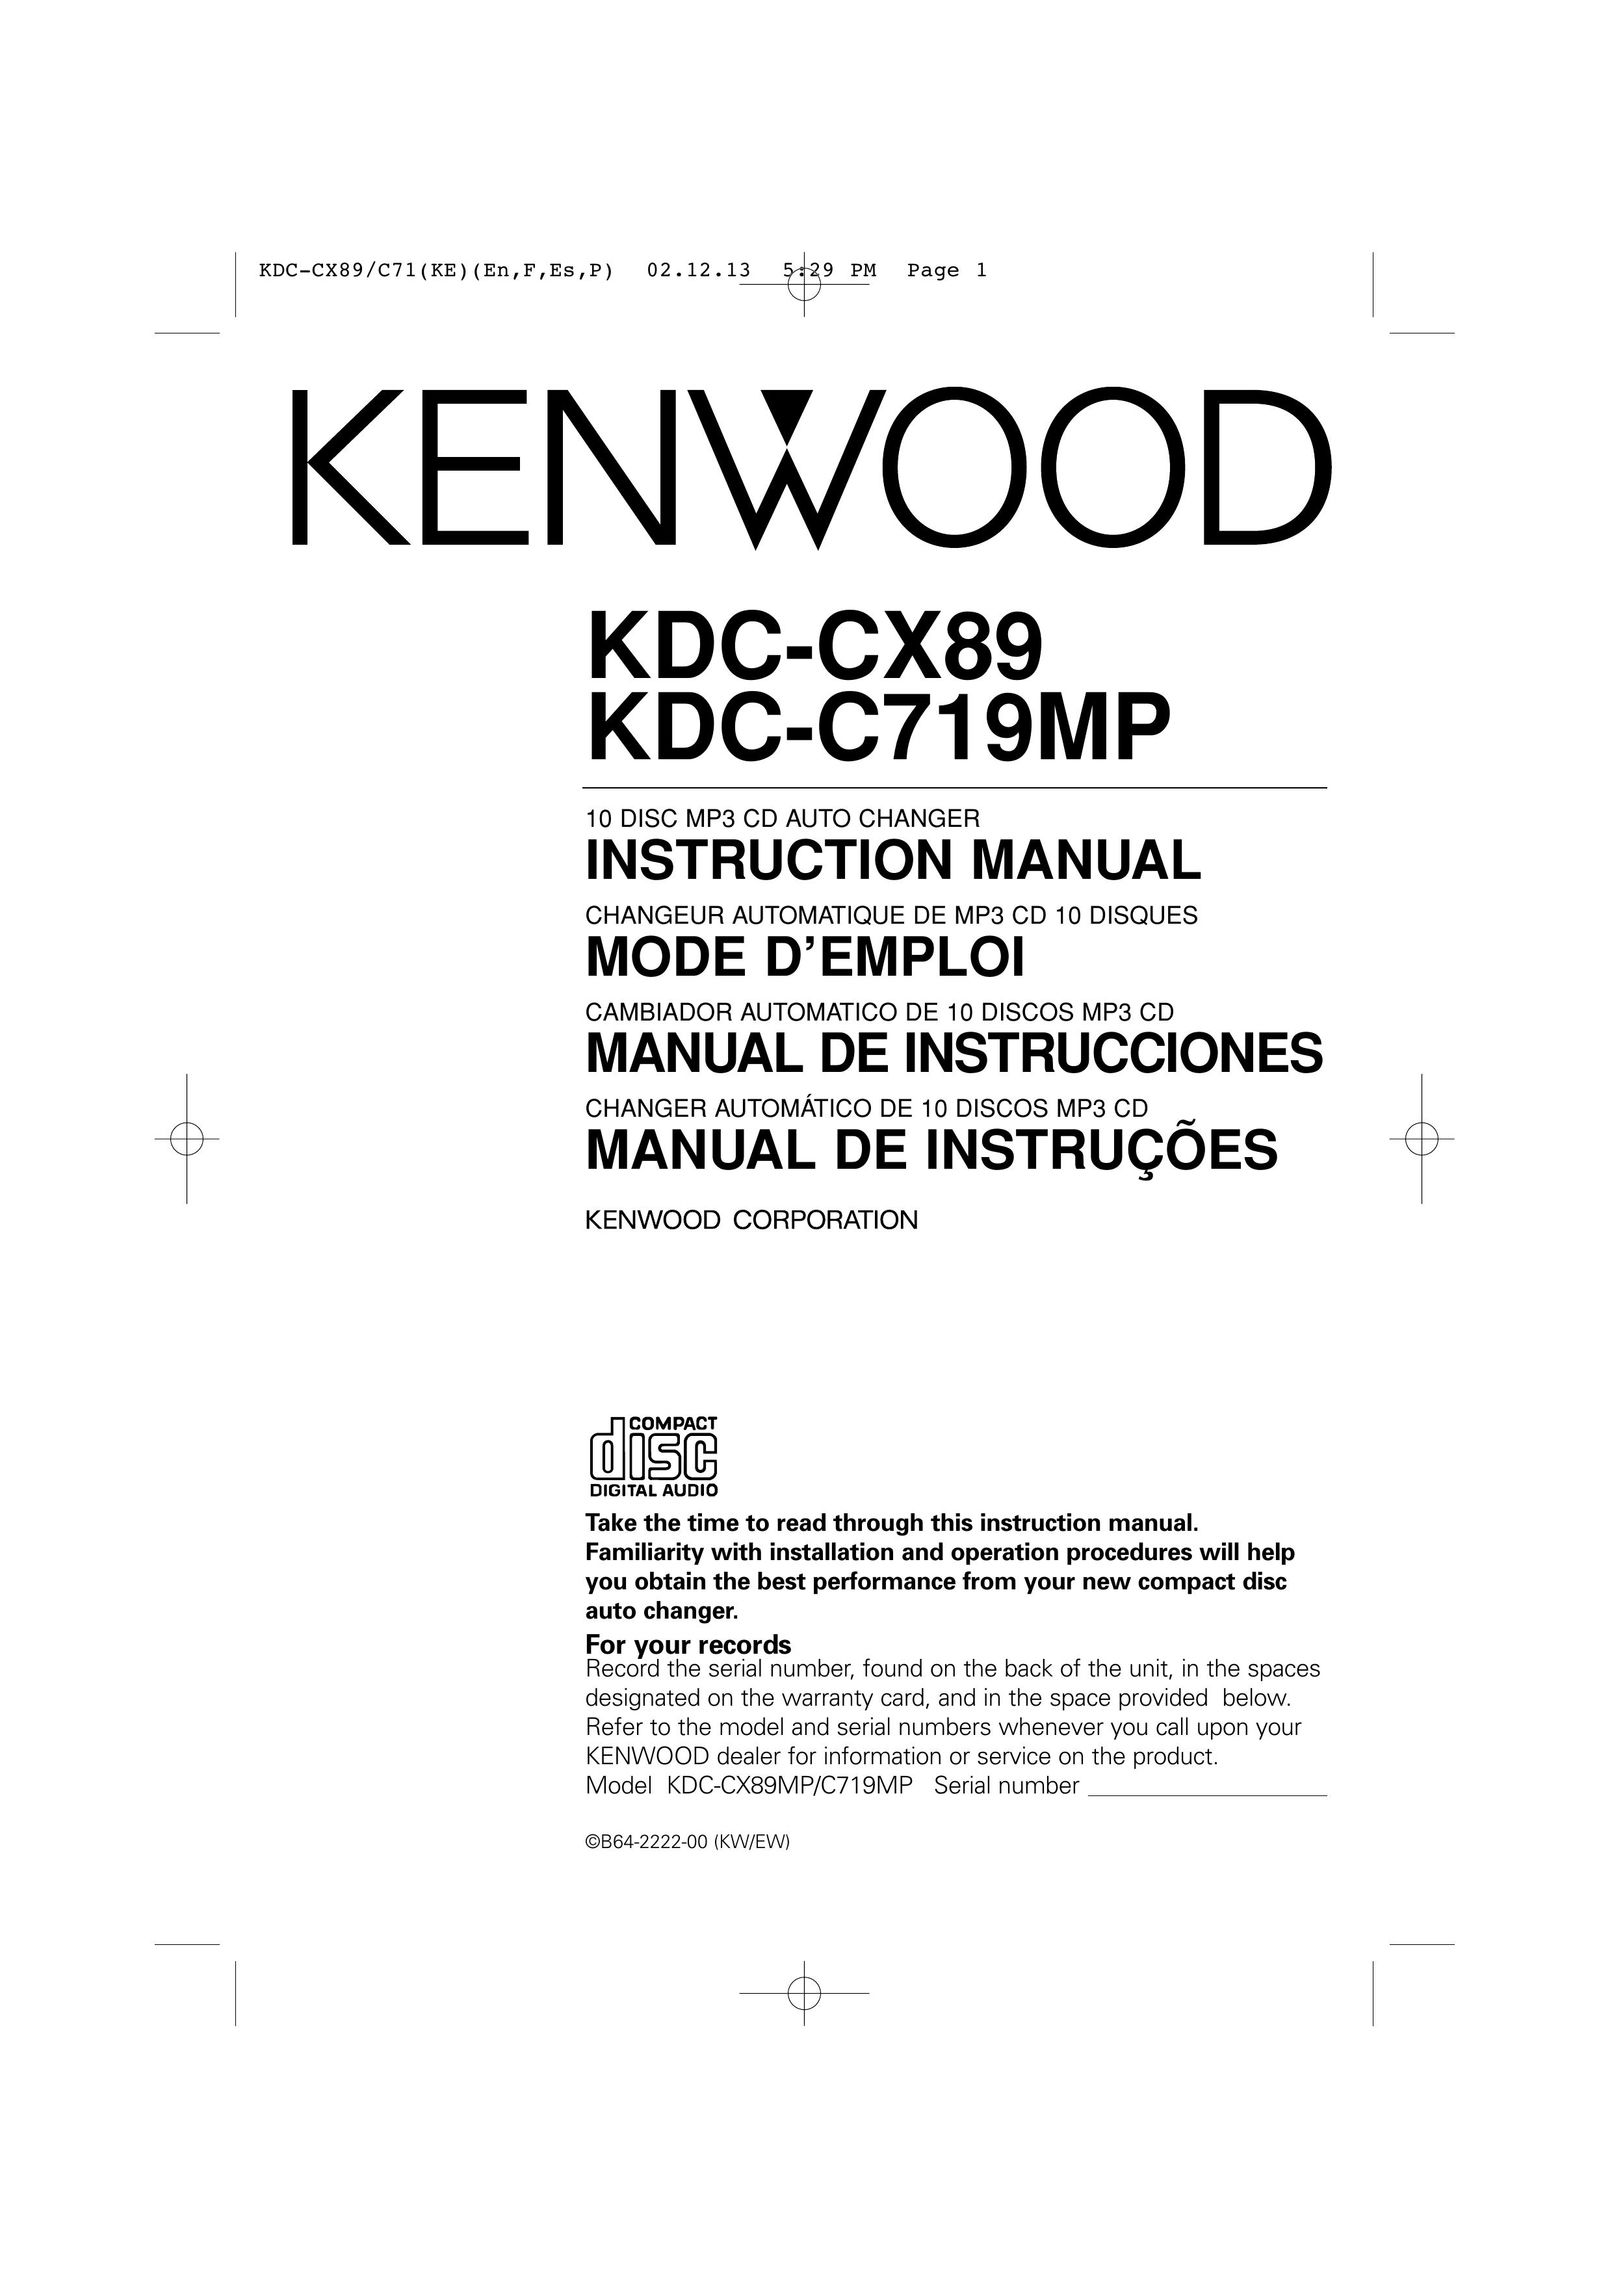 Kenwood KDC-C719PM MP3 Player User Manual